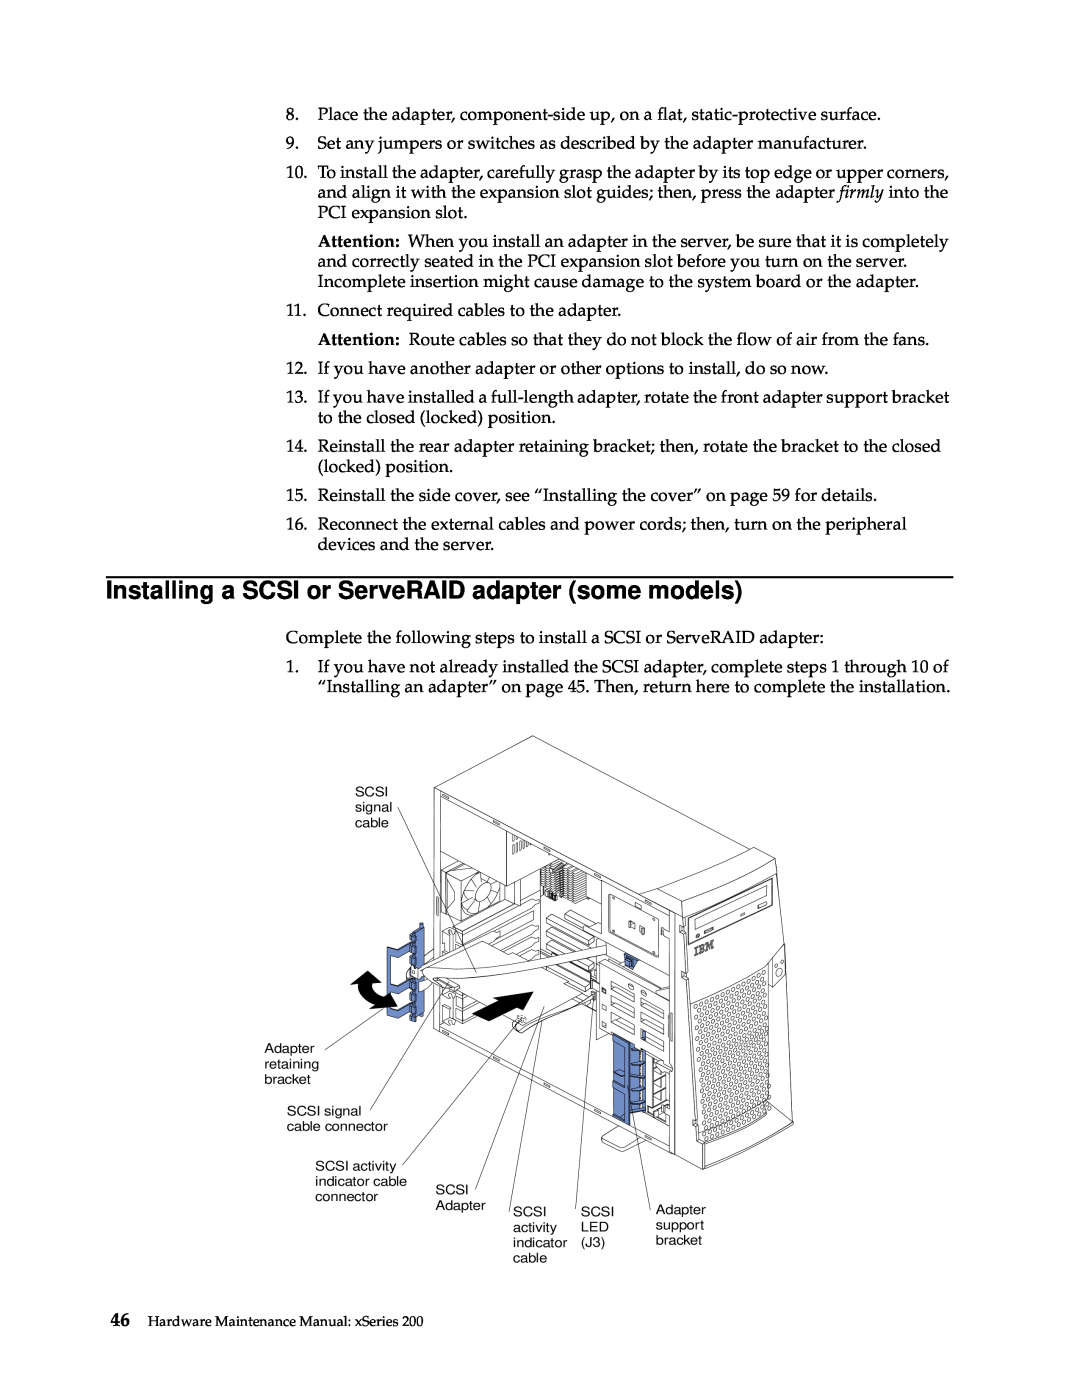 IBM x Series 200 manual Installing a SCSI or ServeRAID adapter some models 